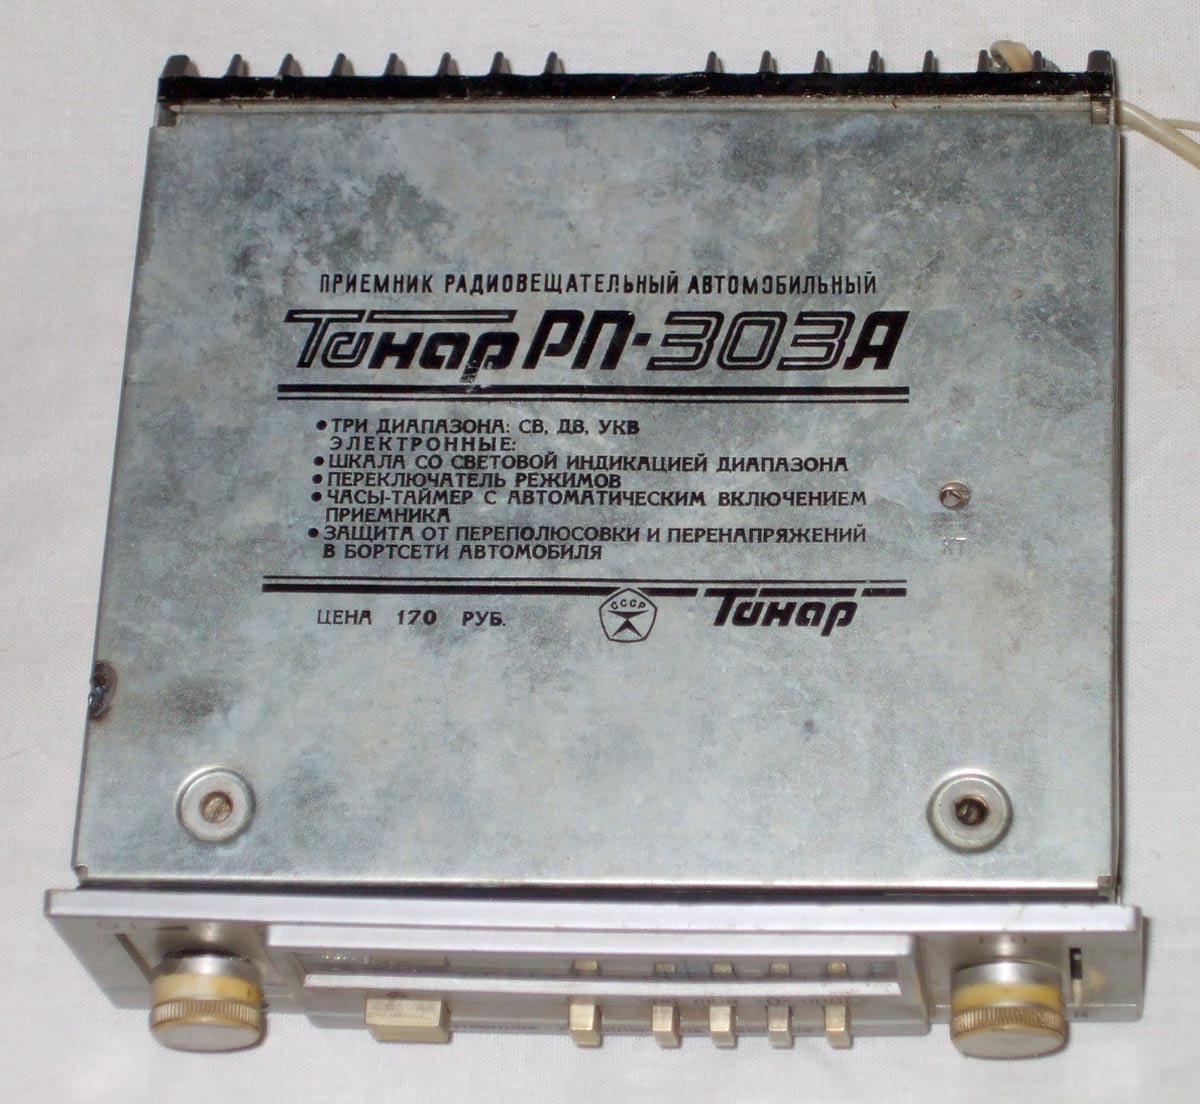 Тонар РП-303А